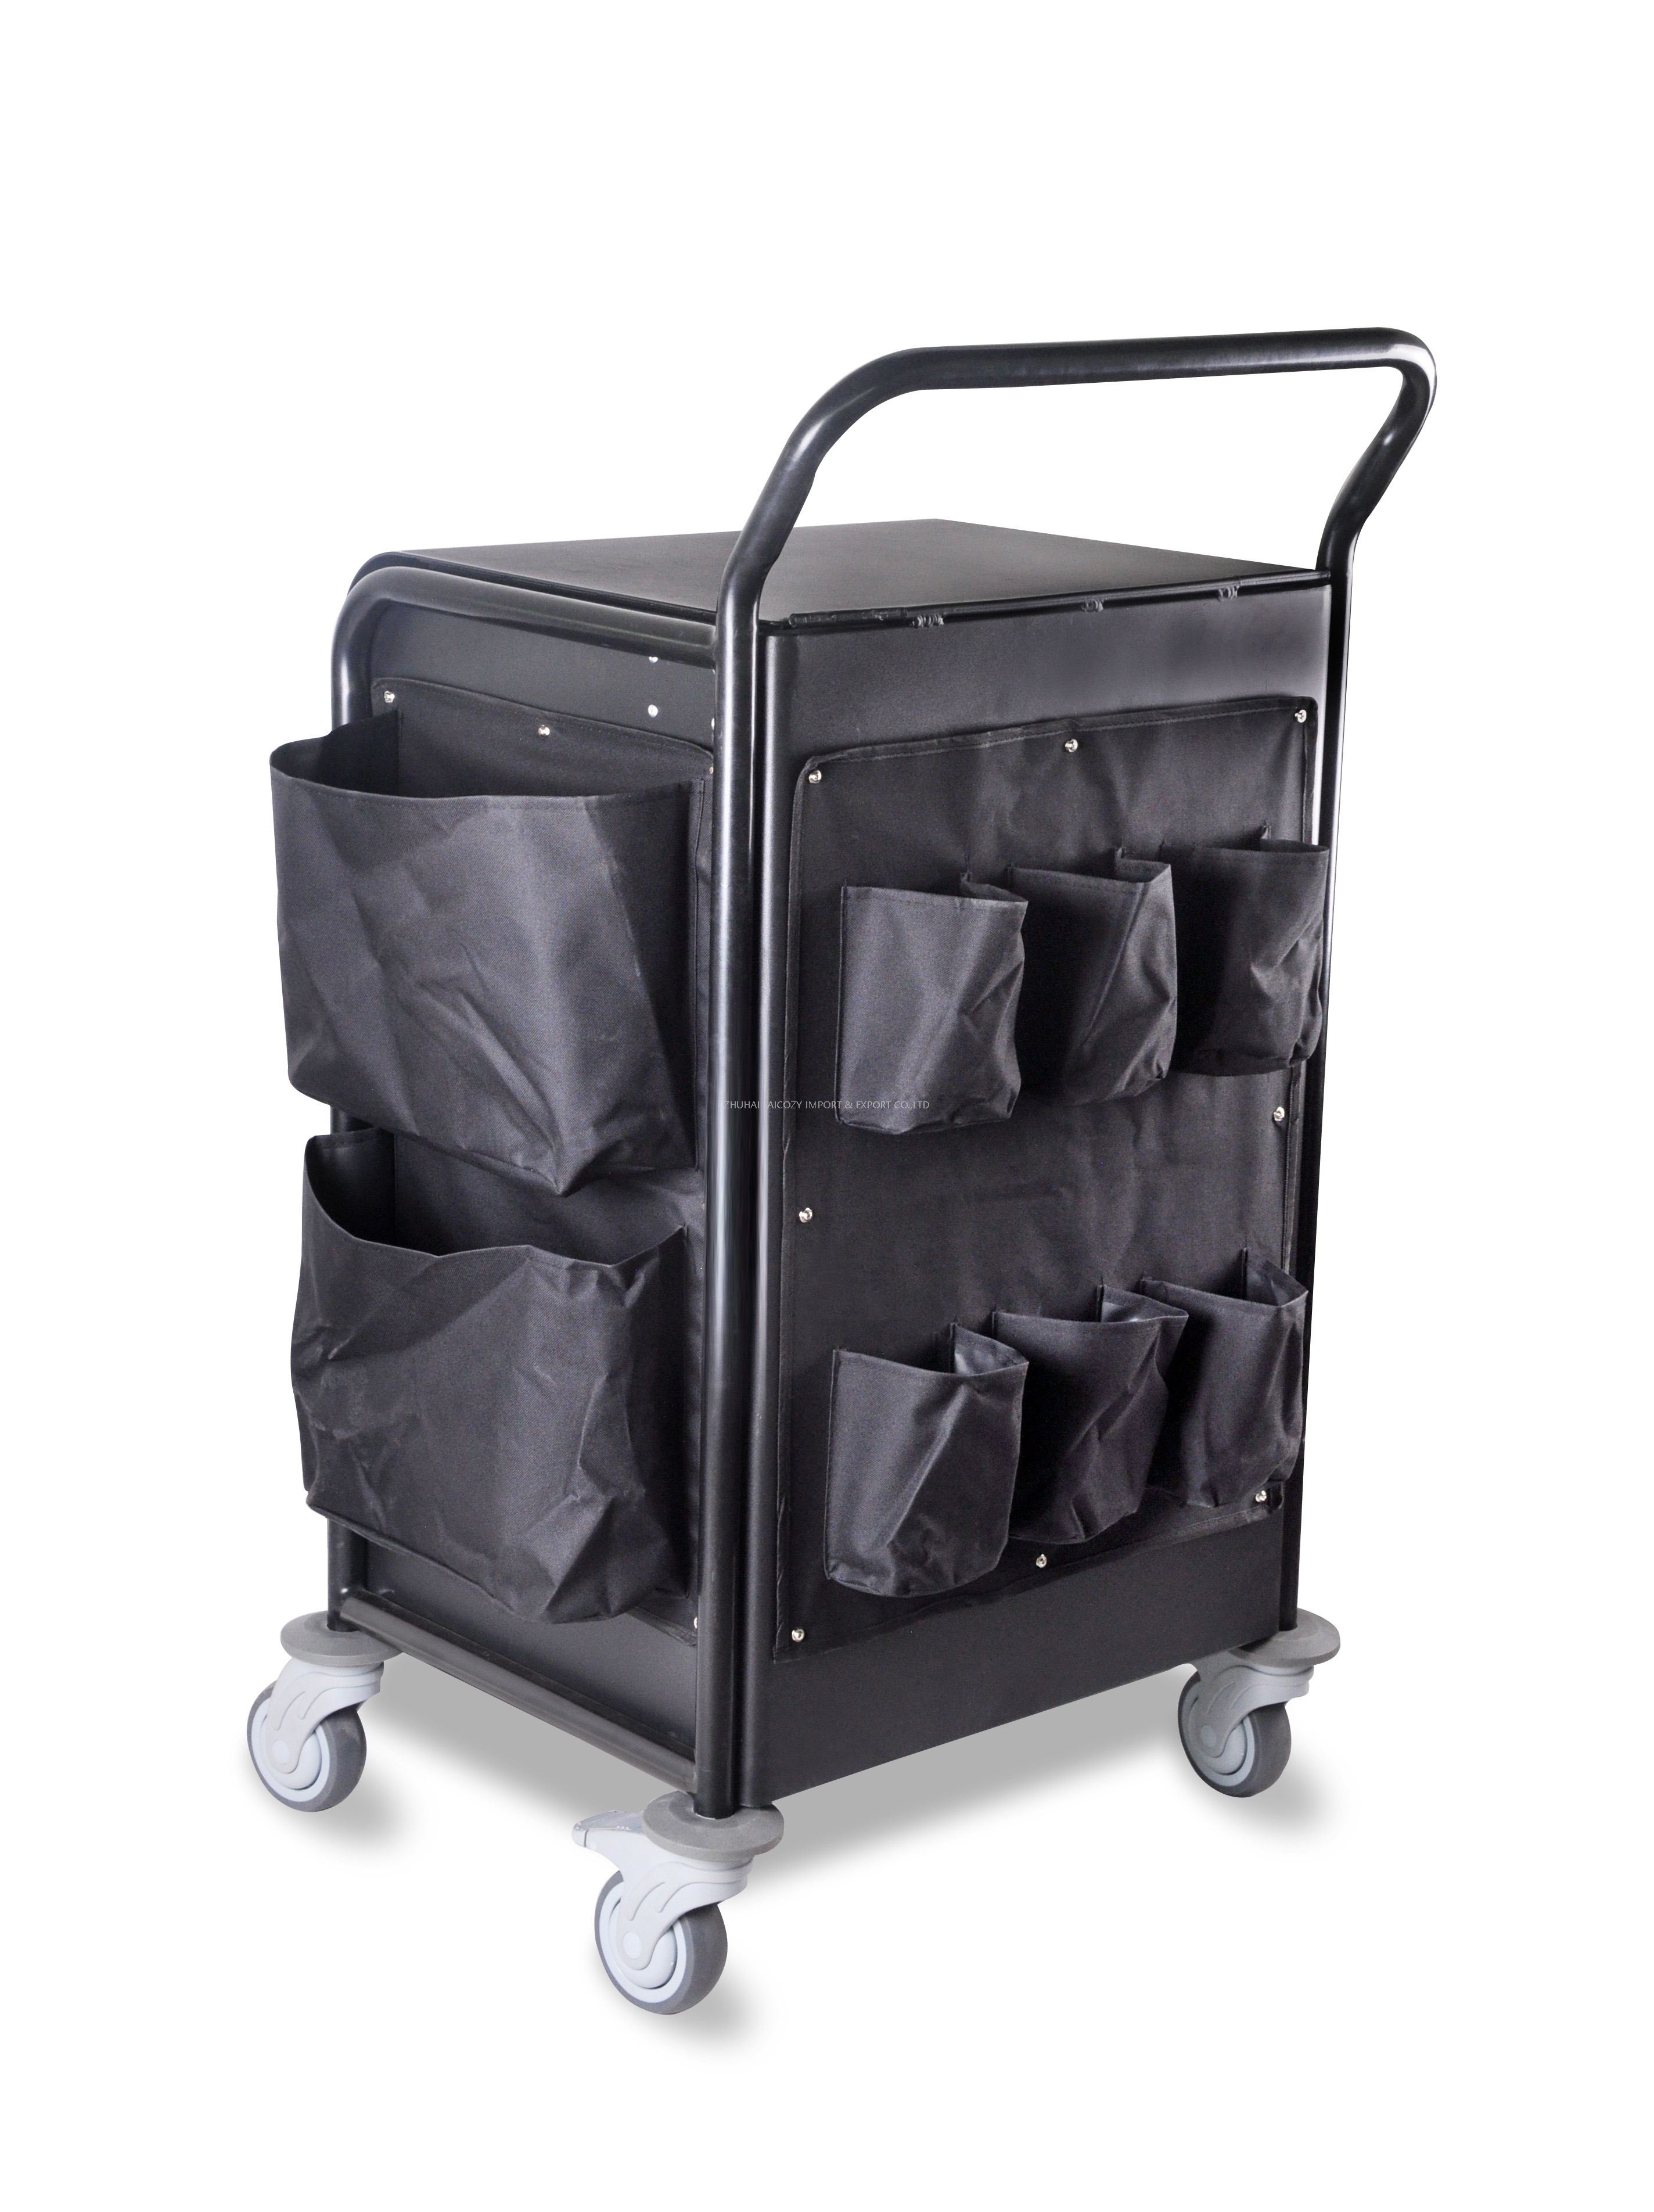  Aluminium Compact Size Service Trolley Mini Black Housekeeping Maid Cart 